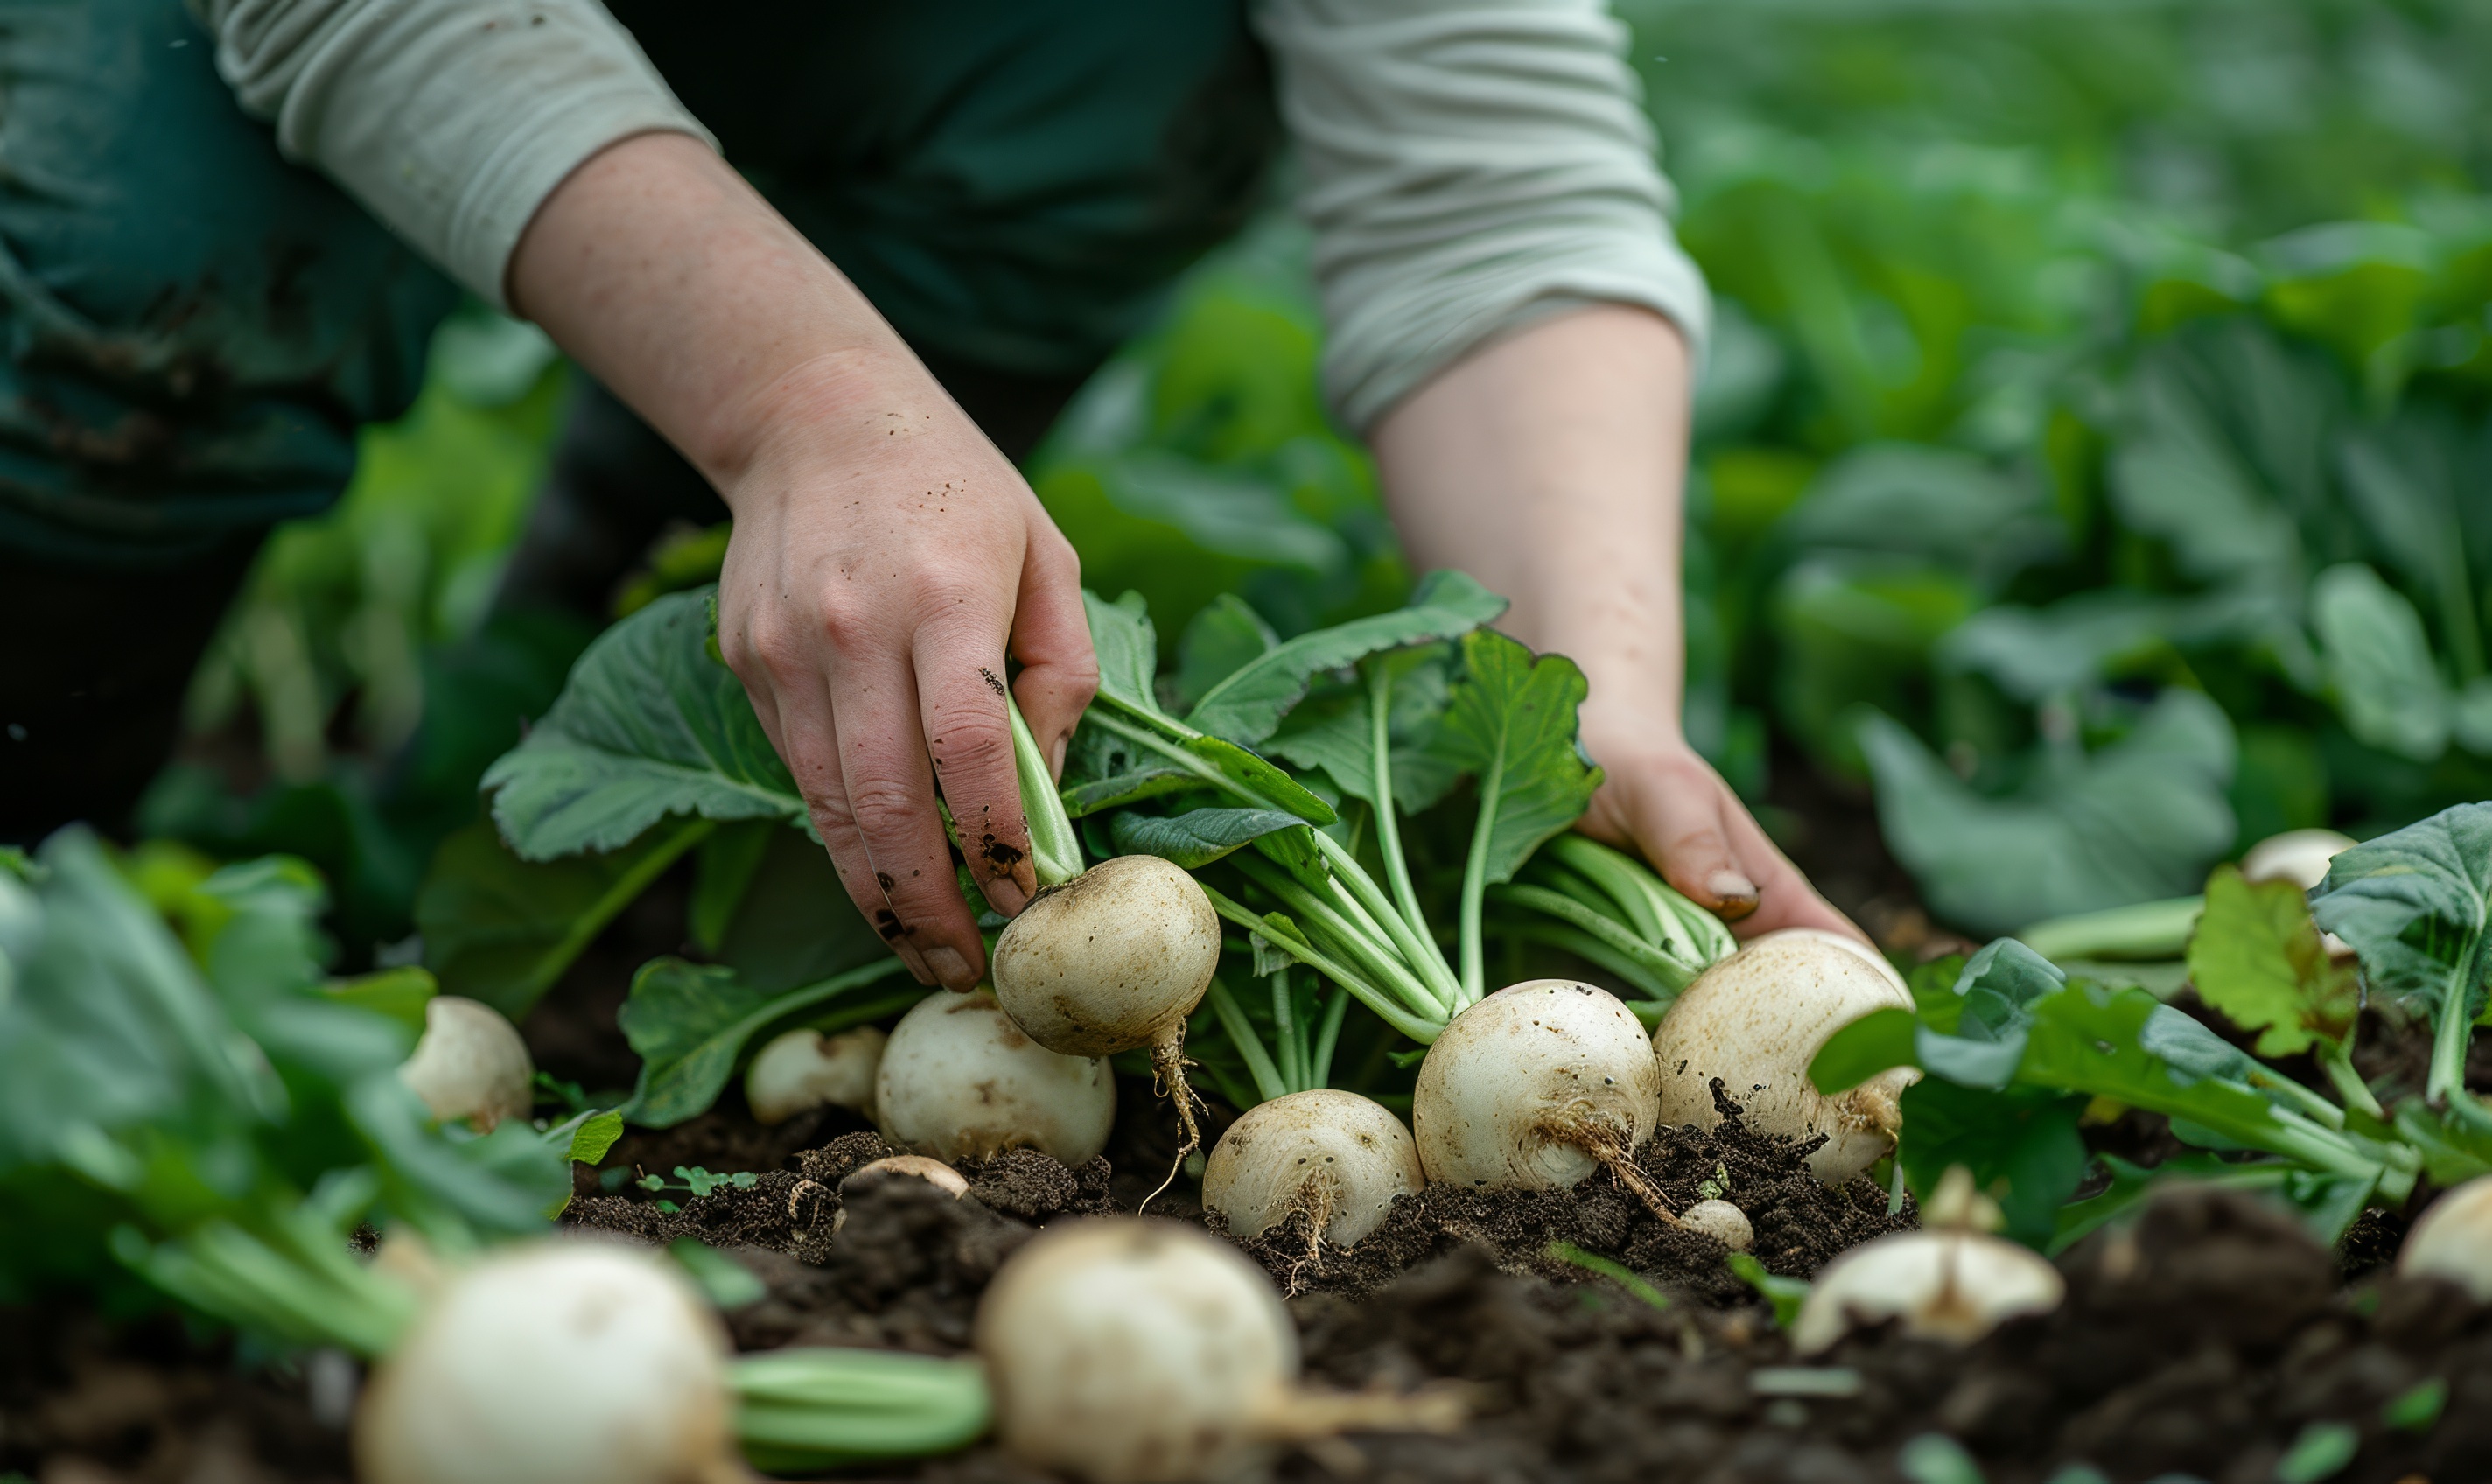 Gardener harvesting turnip roots in the spring